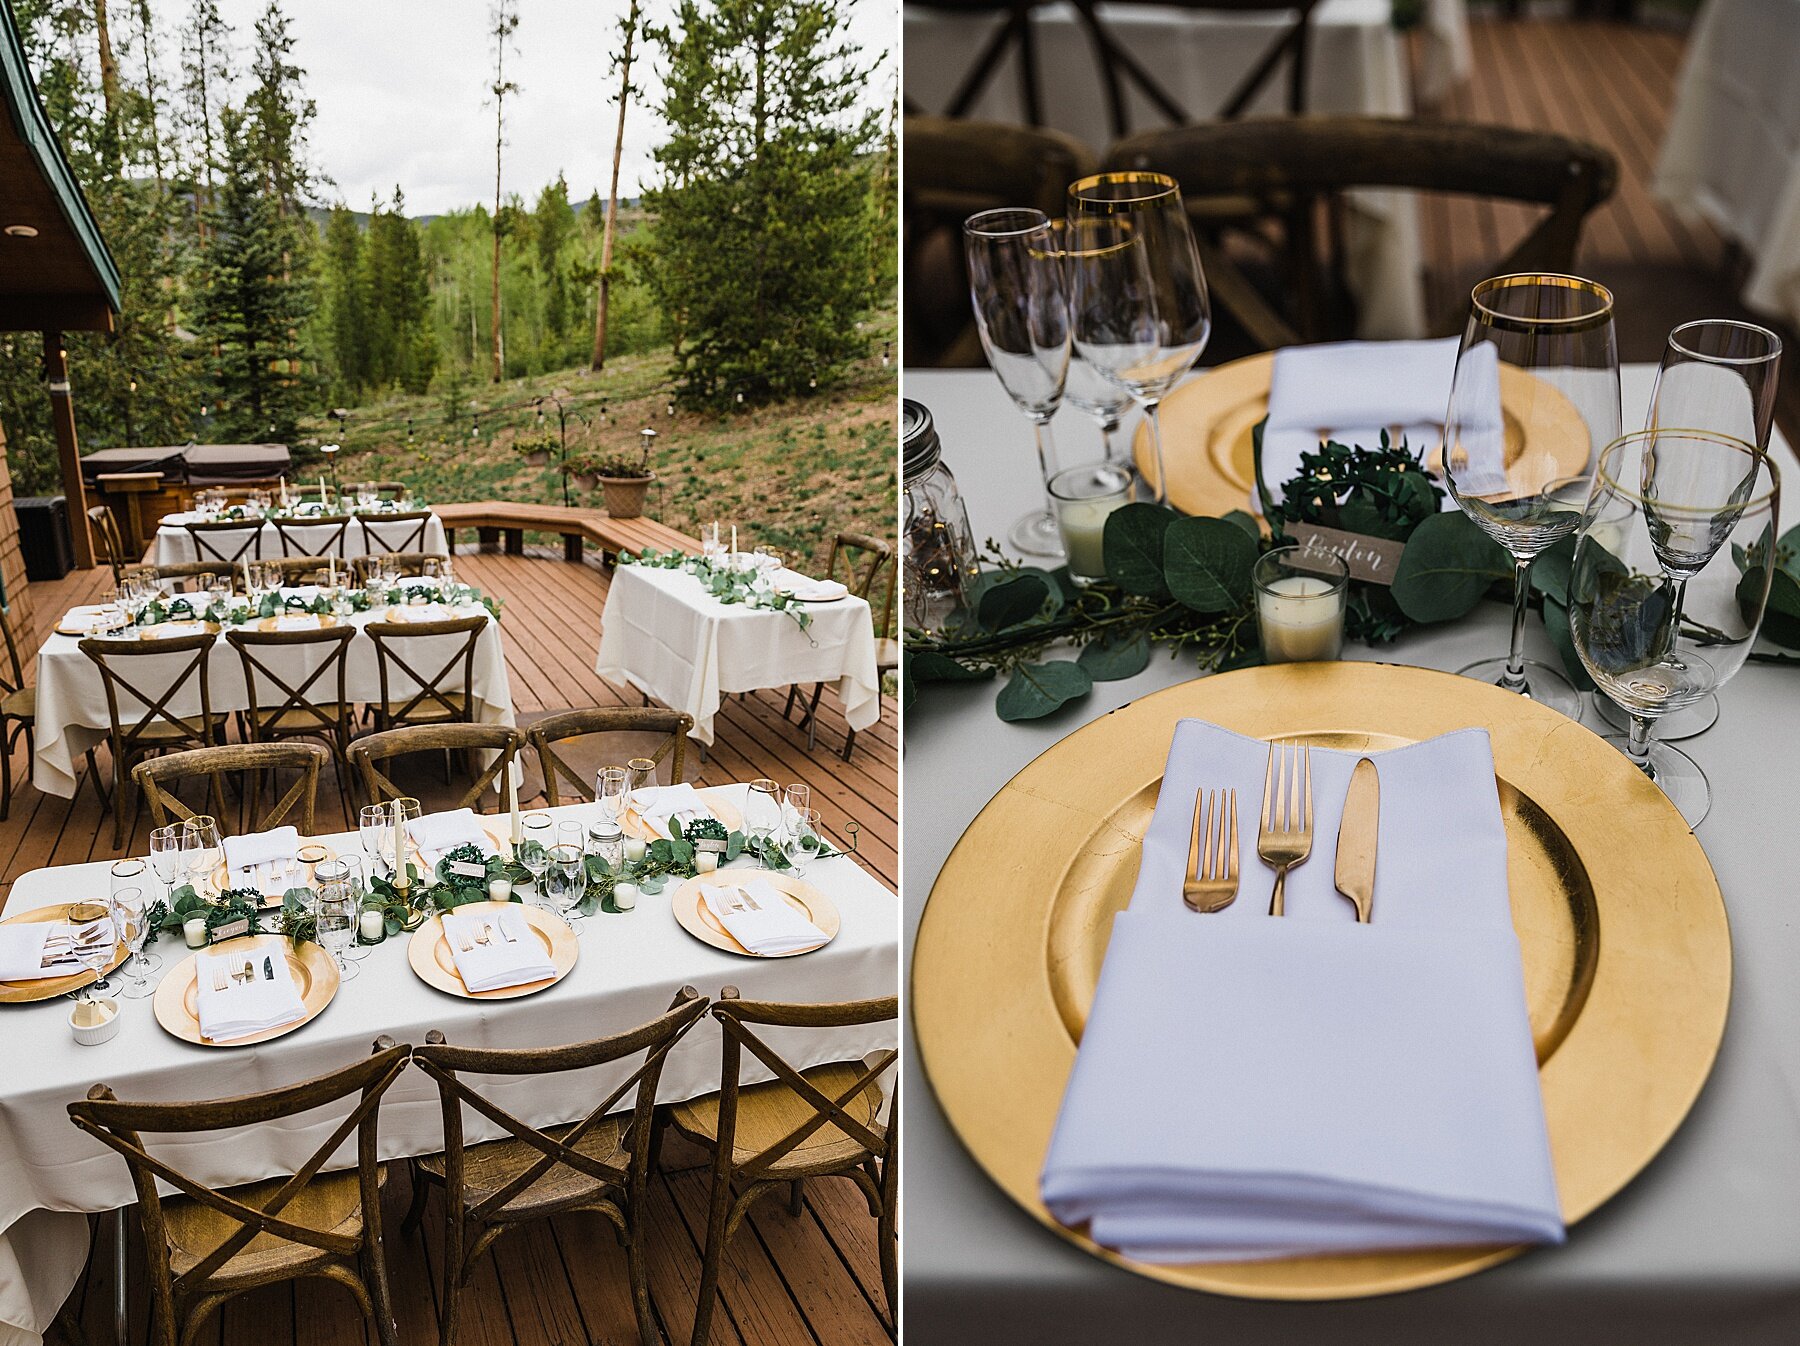 Breckenridge Intimate Wedding | Colorado Elopement Photographer 